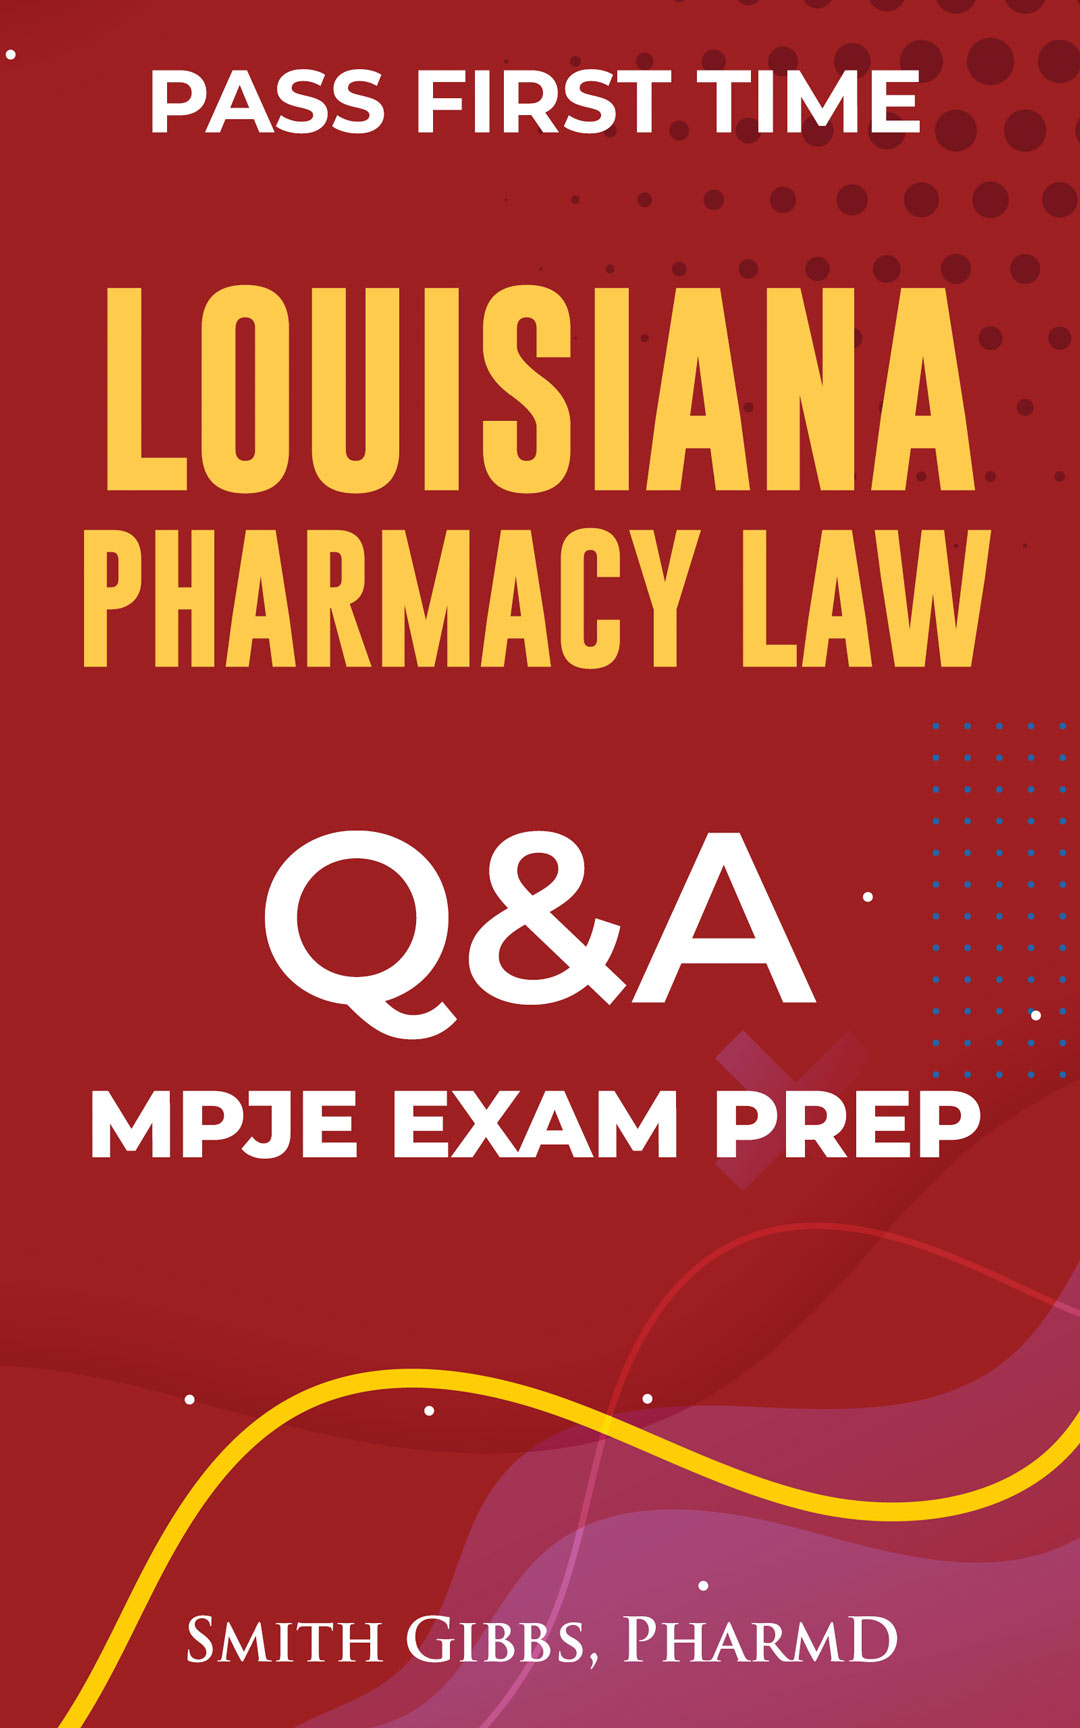 Louisiana Pharmacy Law MPJE Exam prep Q & A